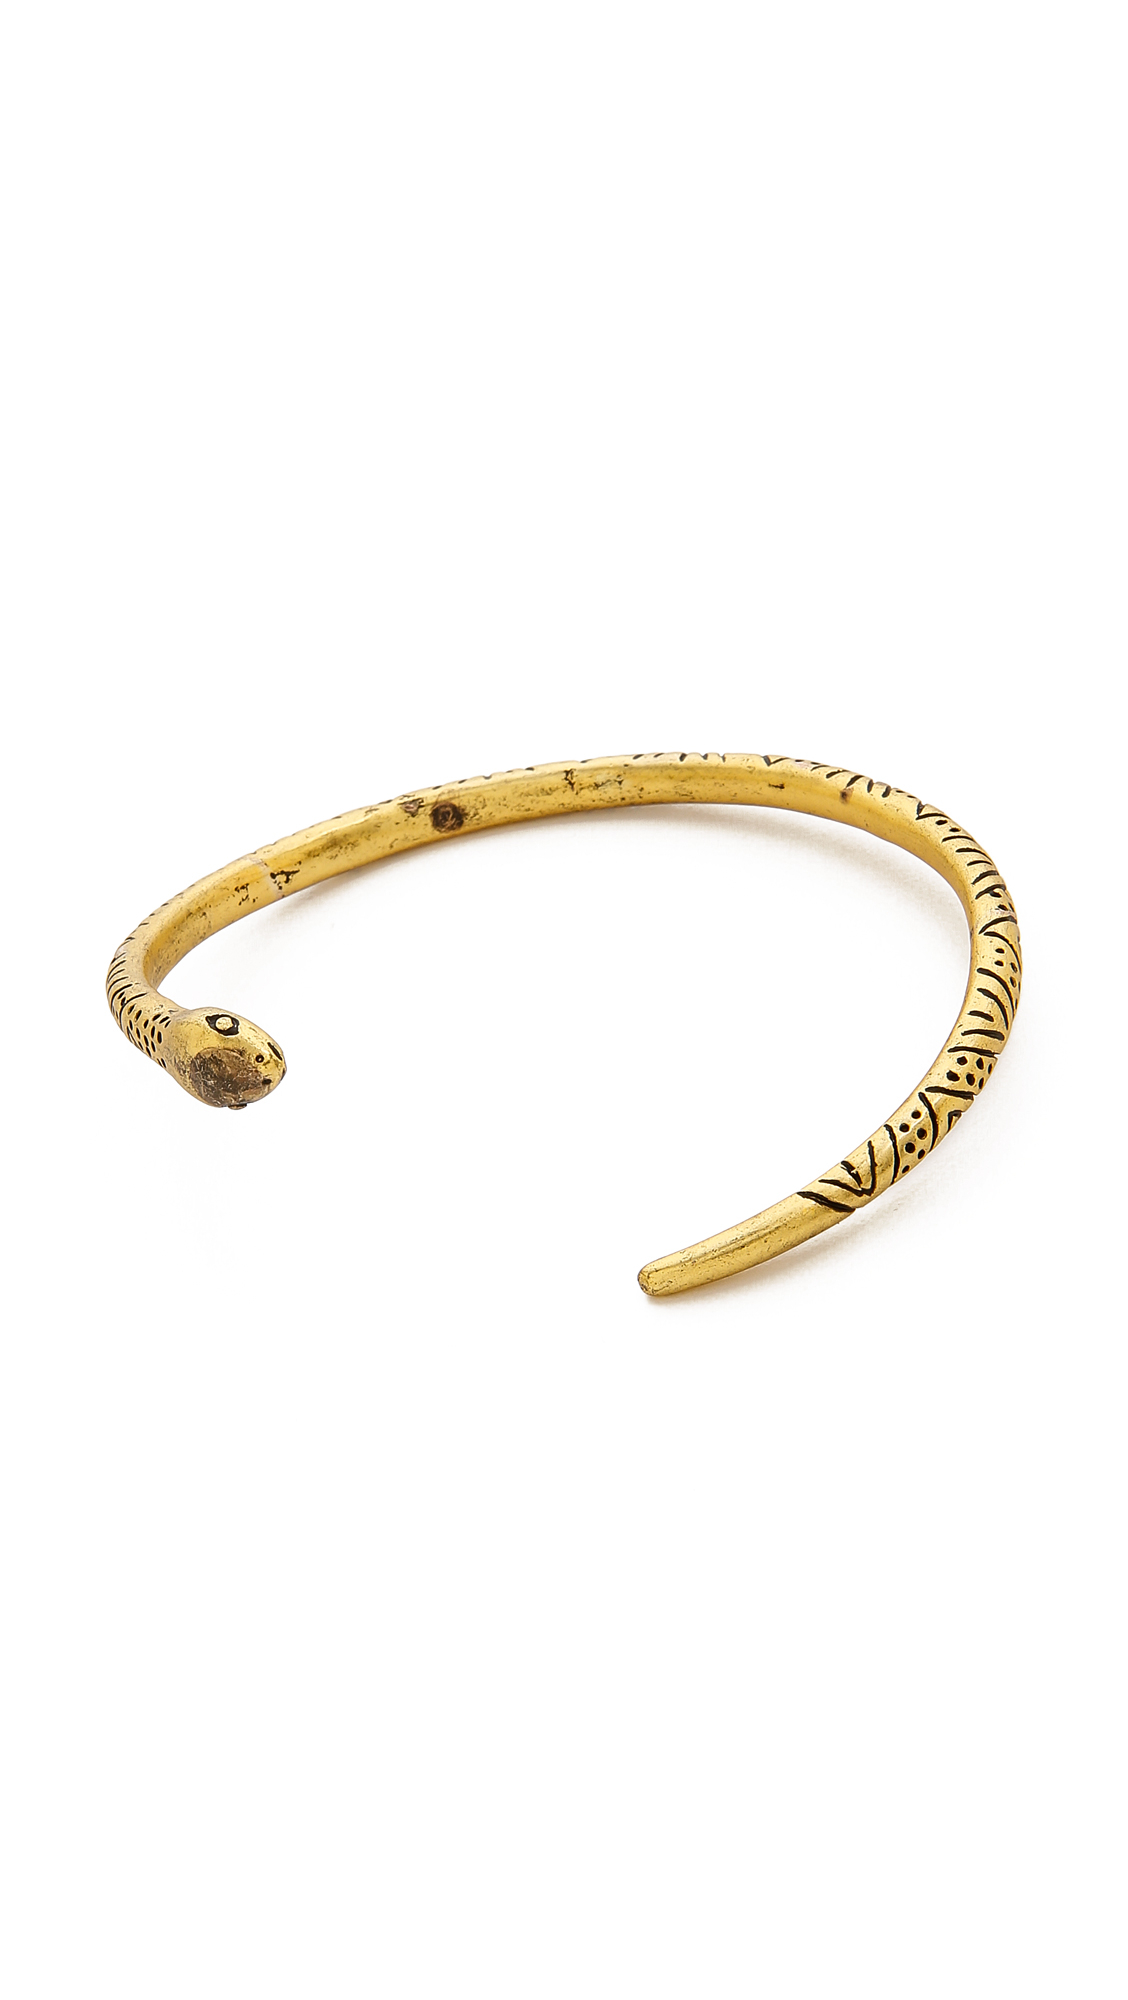 Lyst - Madewell Snake Cuff Bracelet - Gold in Metallic